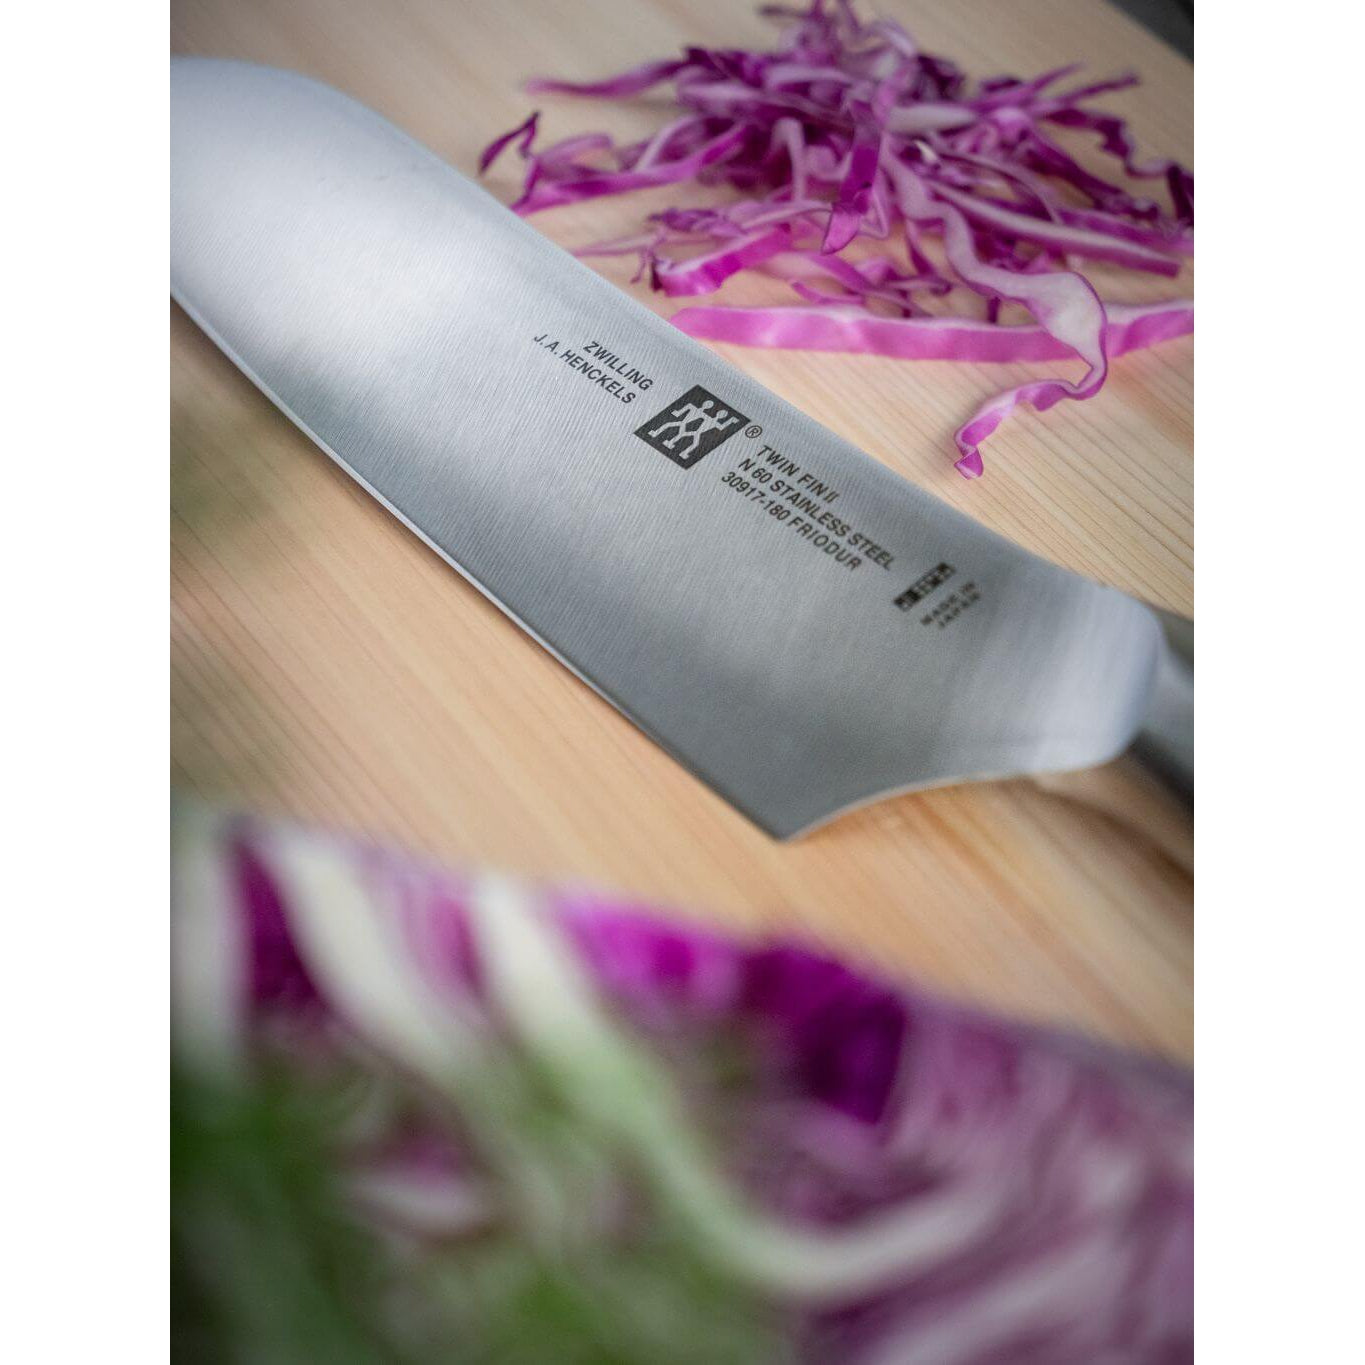 Zwilling Twin Fin II Chef's Knife 20cm